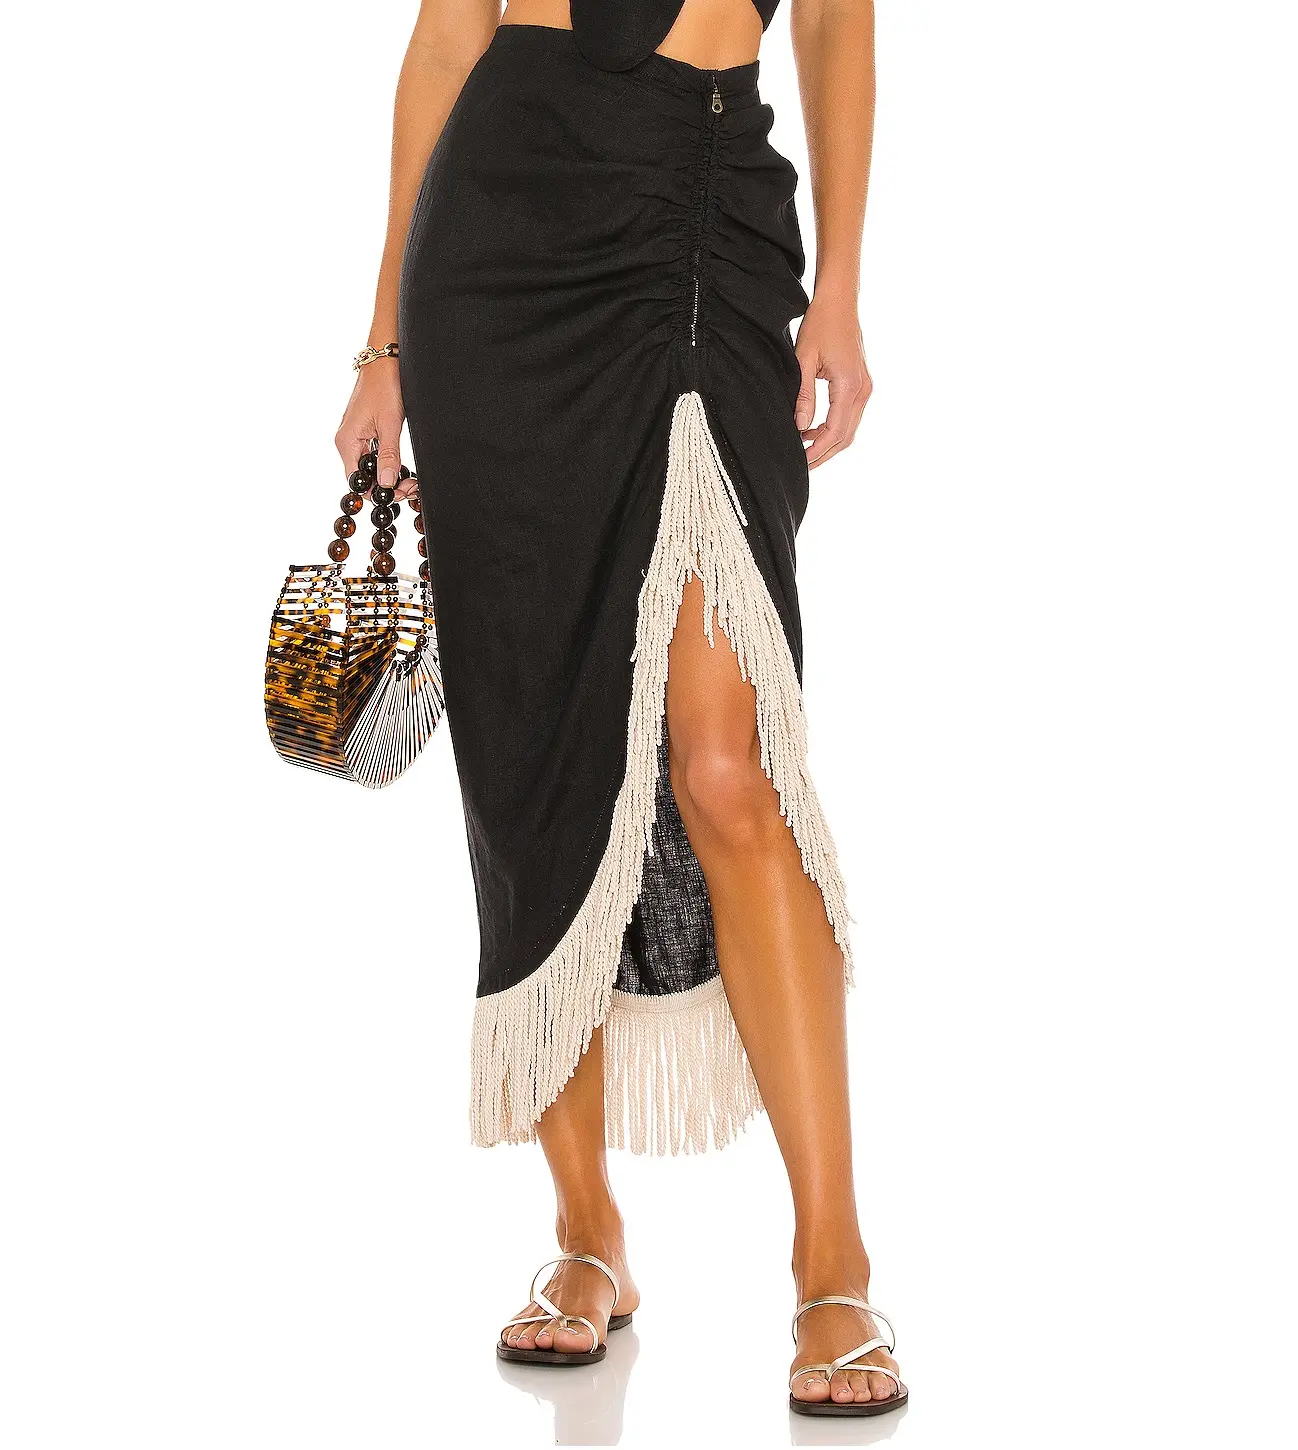 Mujer de moda diseño de alta moda asimétrico Falda corta negro sólido con borlas de gamuza negro borla faldas